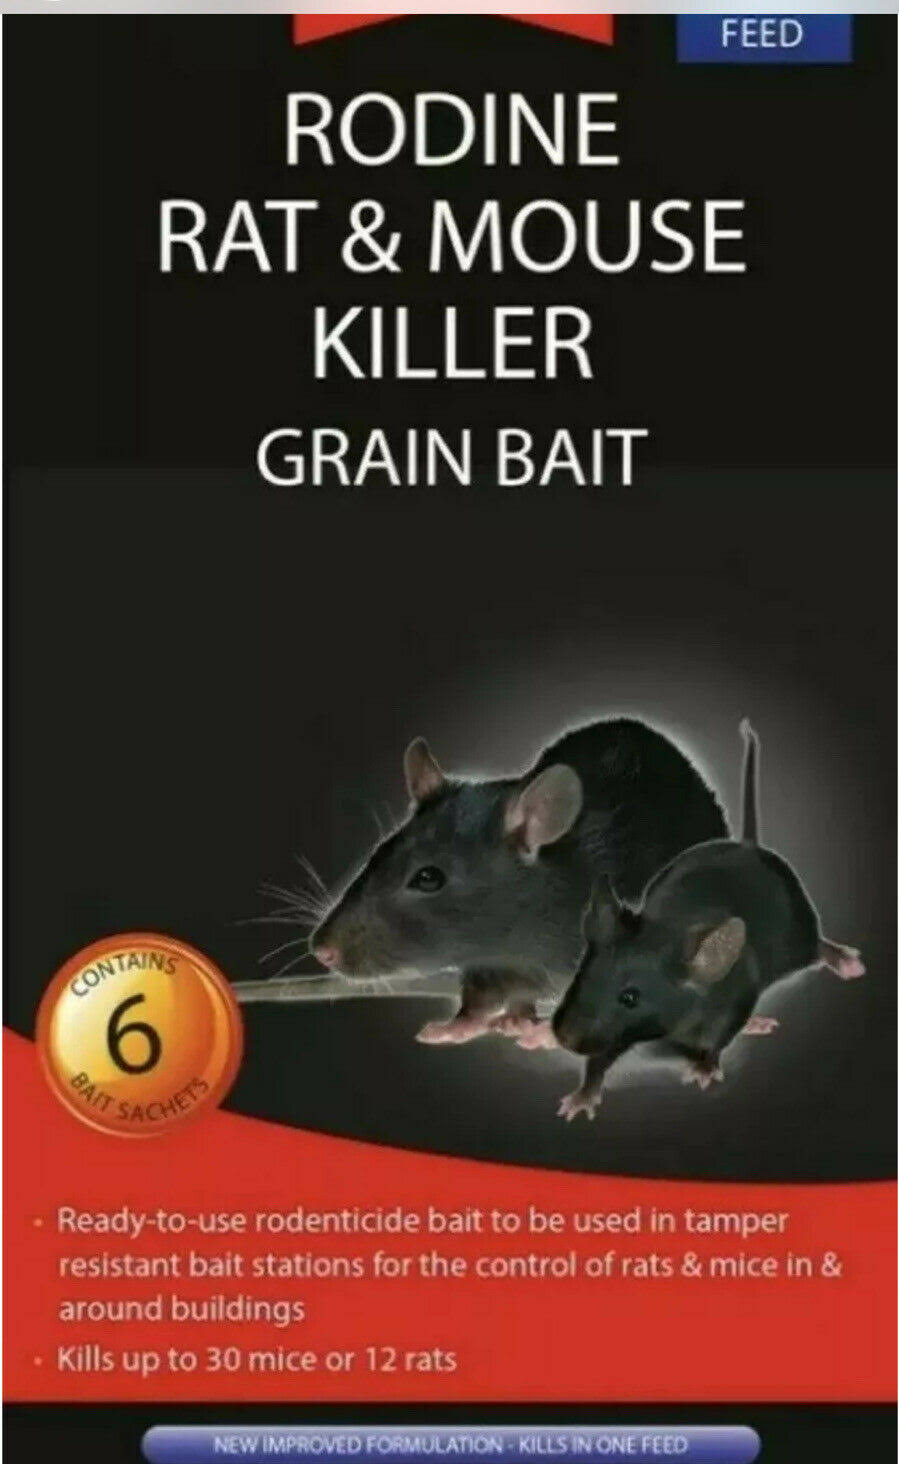 Rentokil Rodine Rat and Mouse Killer Grain Bait - Pack of 6